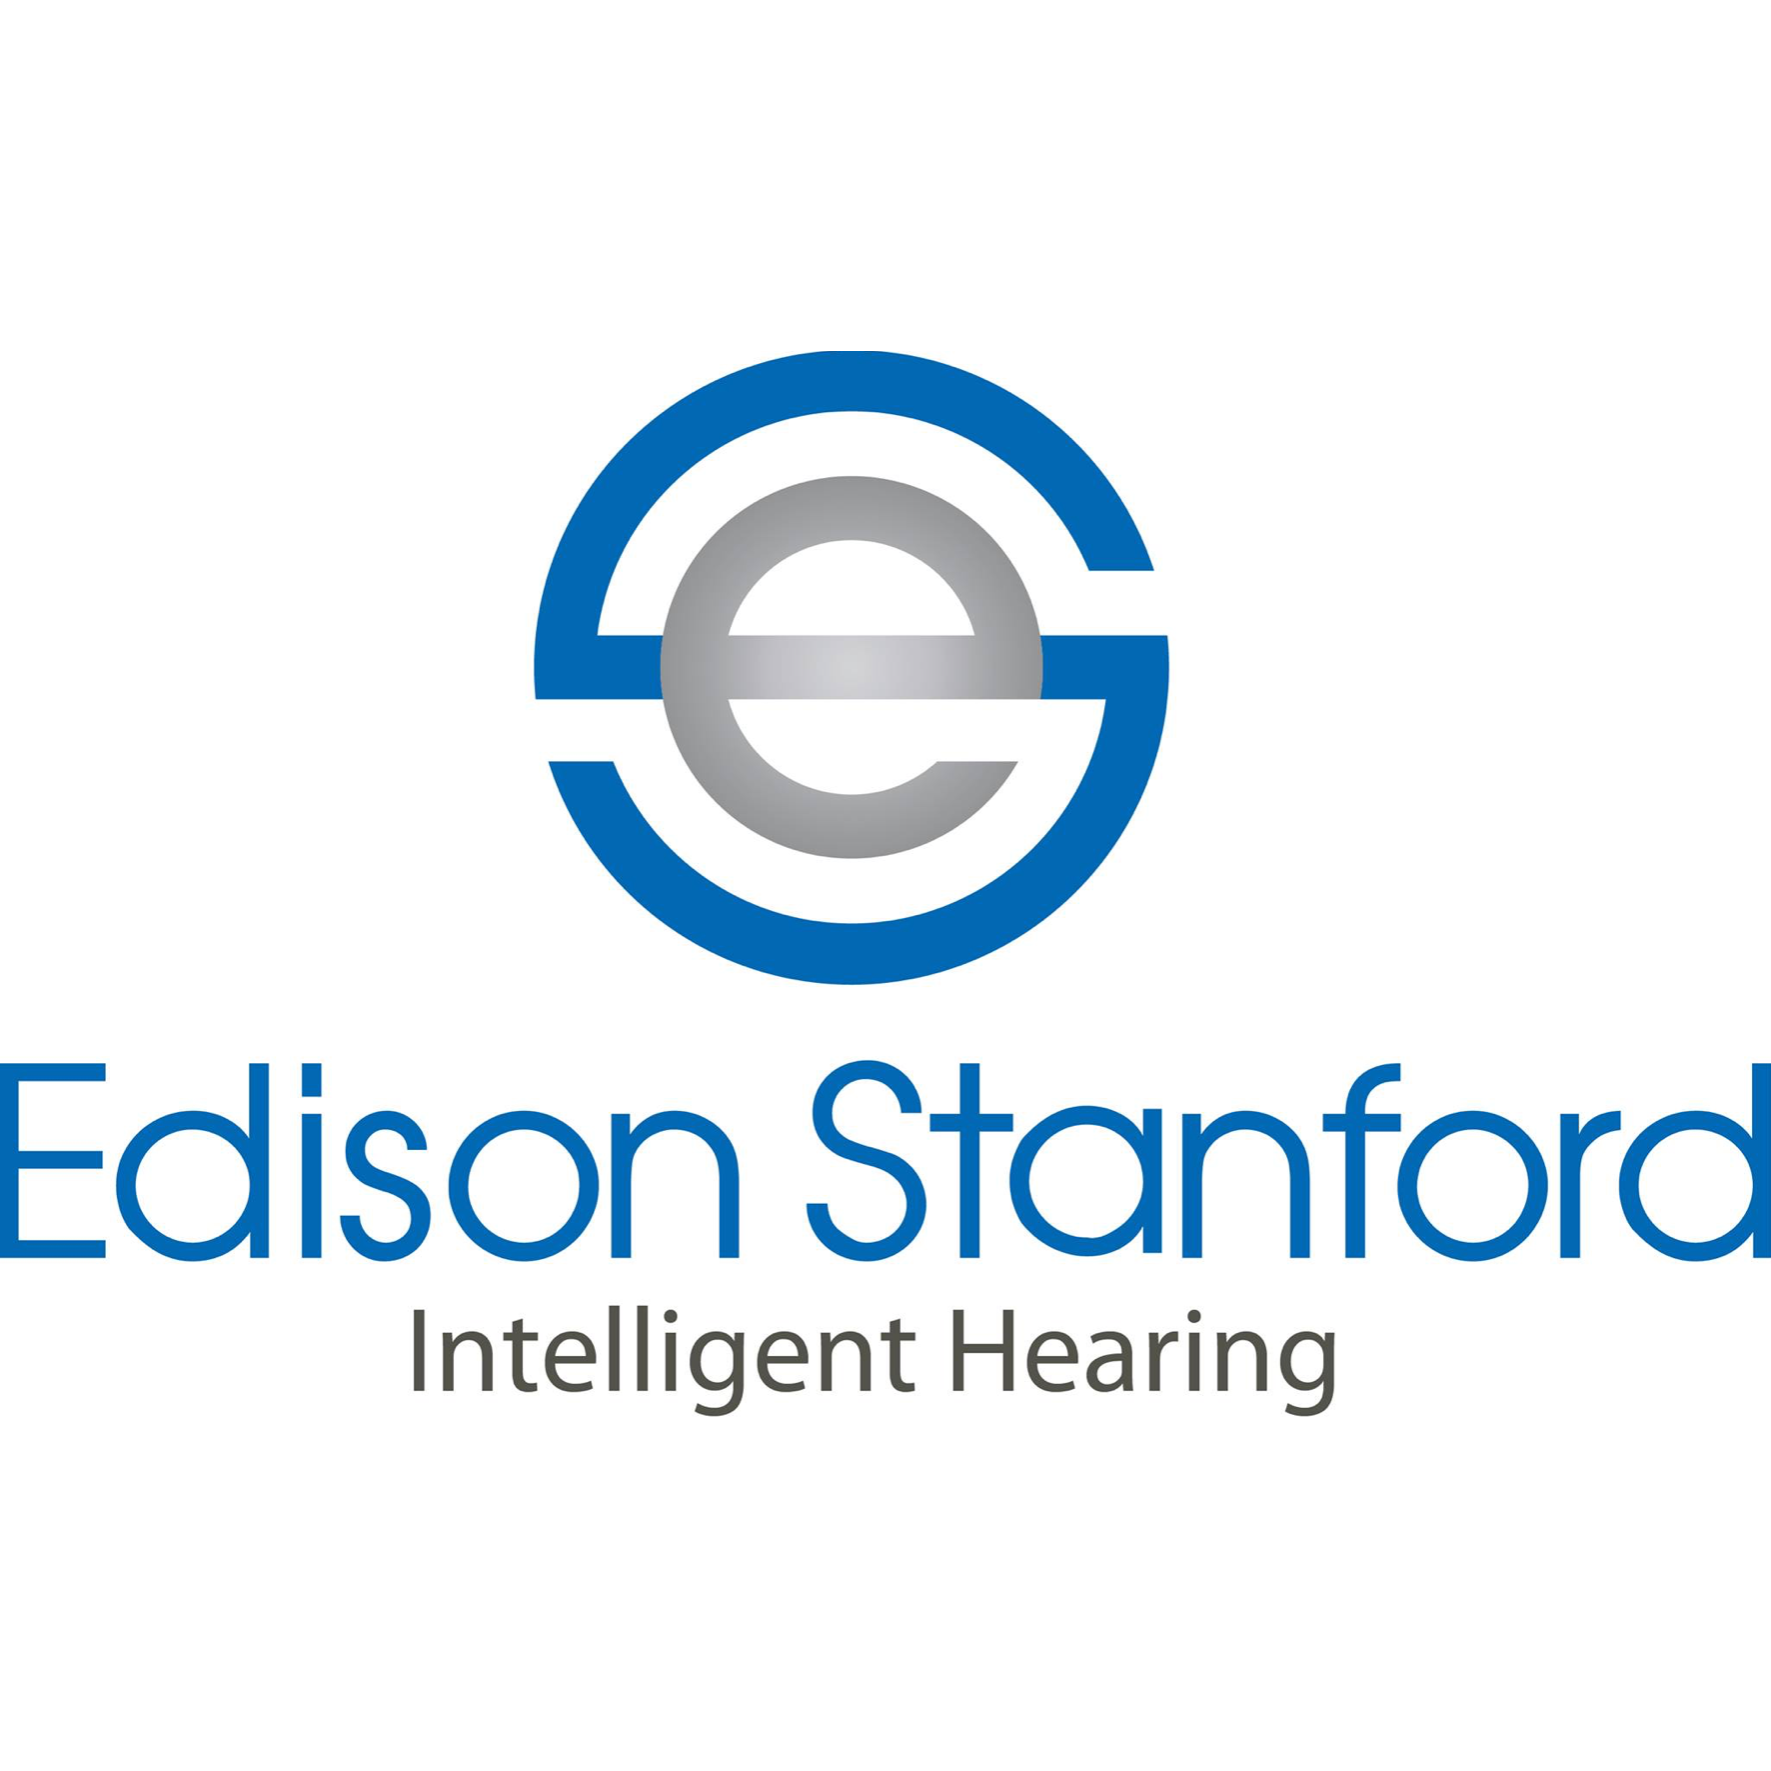 Edison Stanford Intelligent Hearing - Salt Lake City, UT 84115 - (801)639-9834 | ShowMeLocal.com